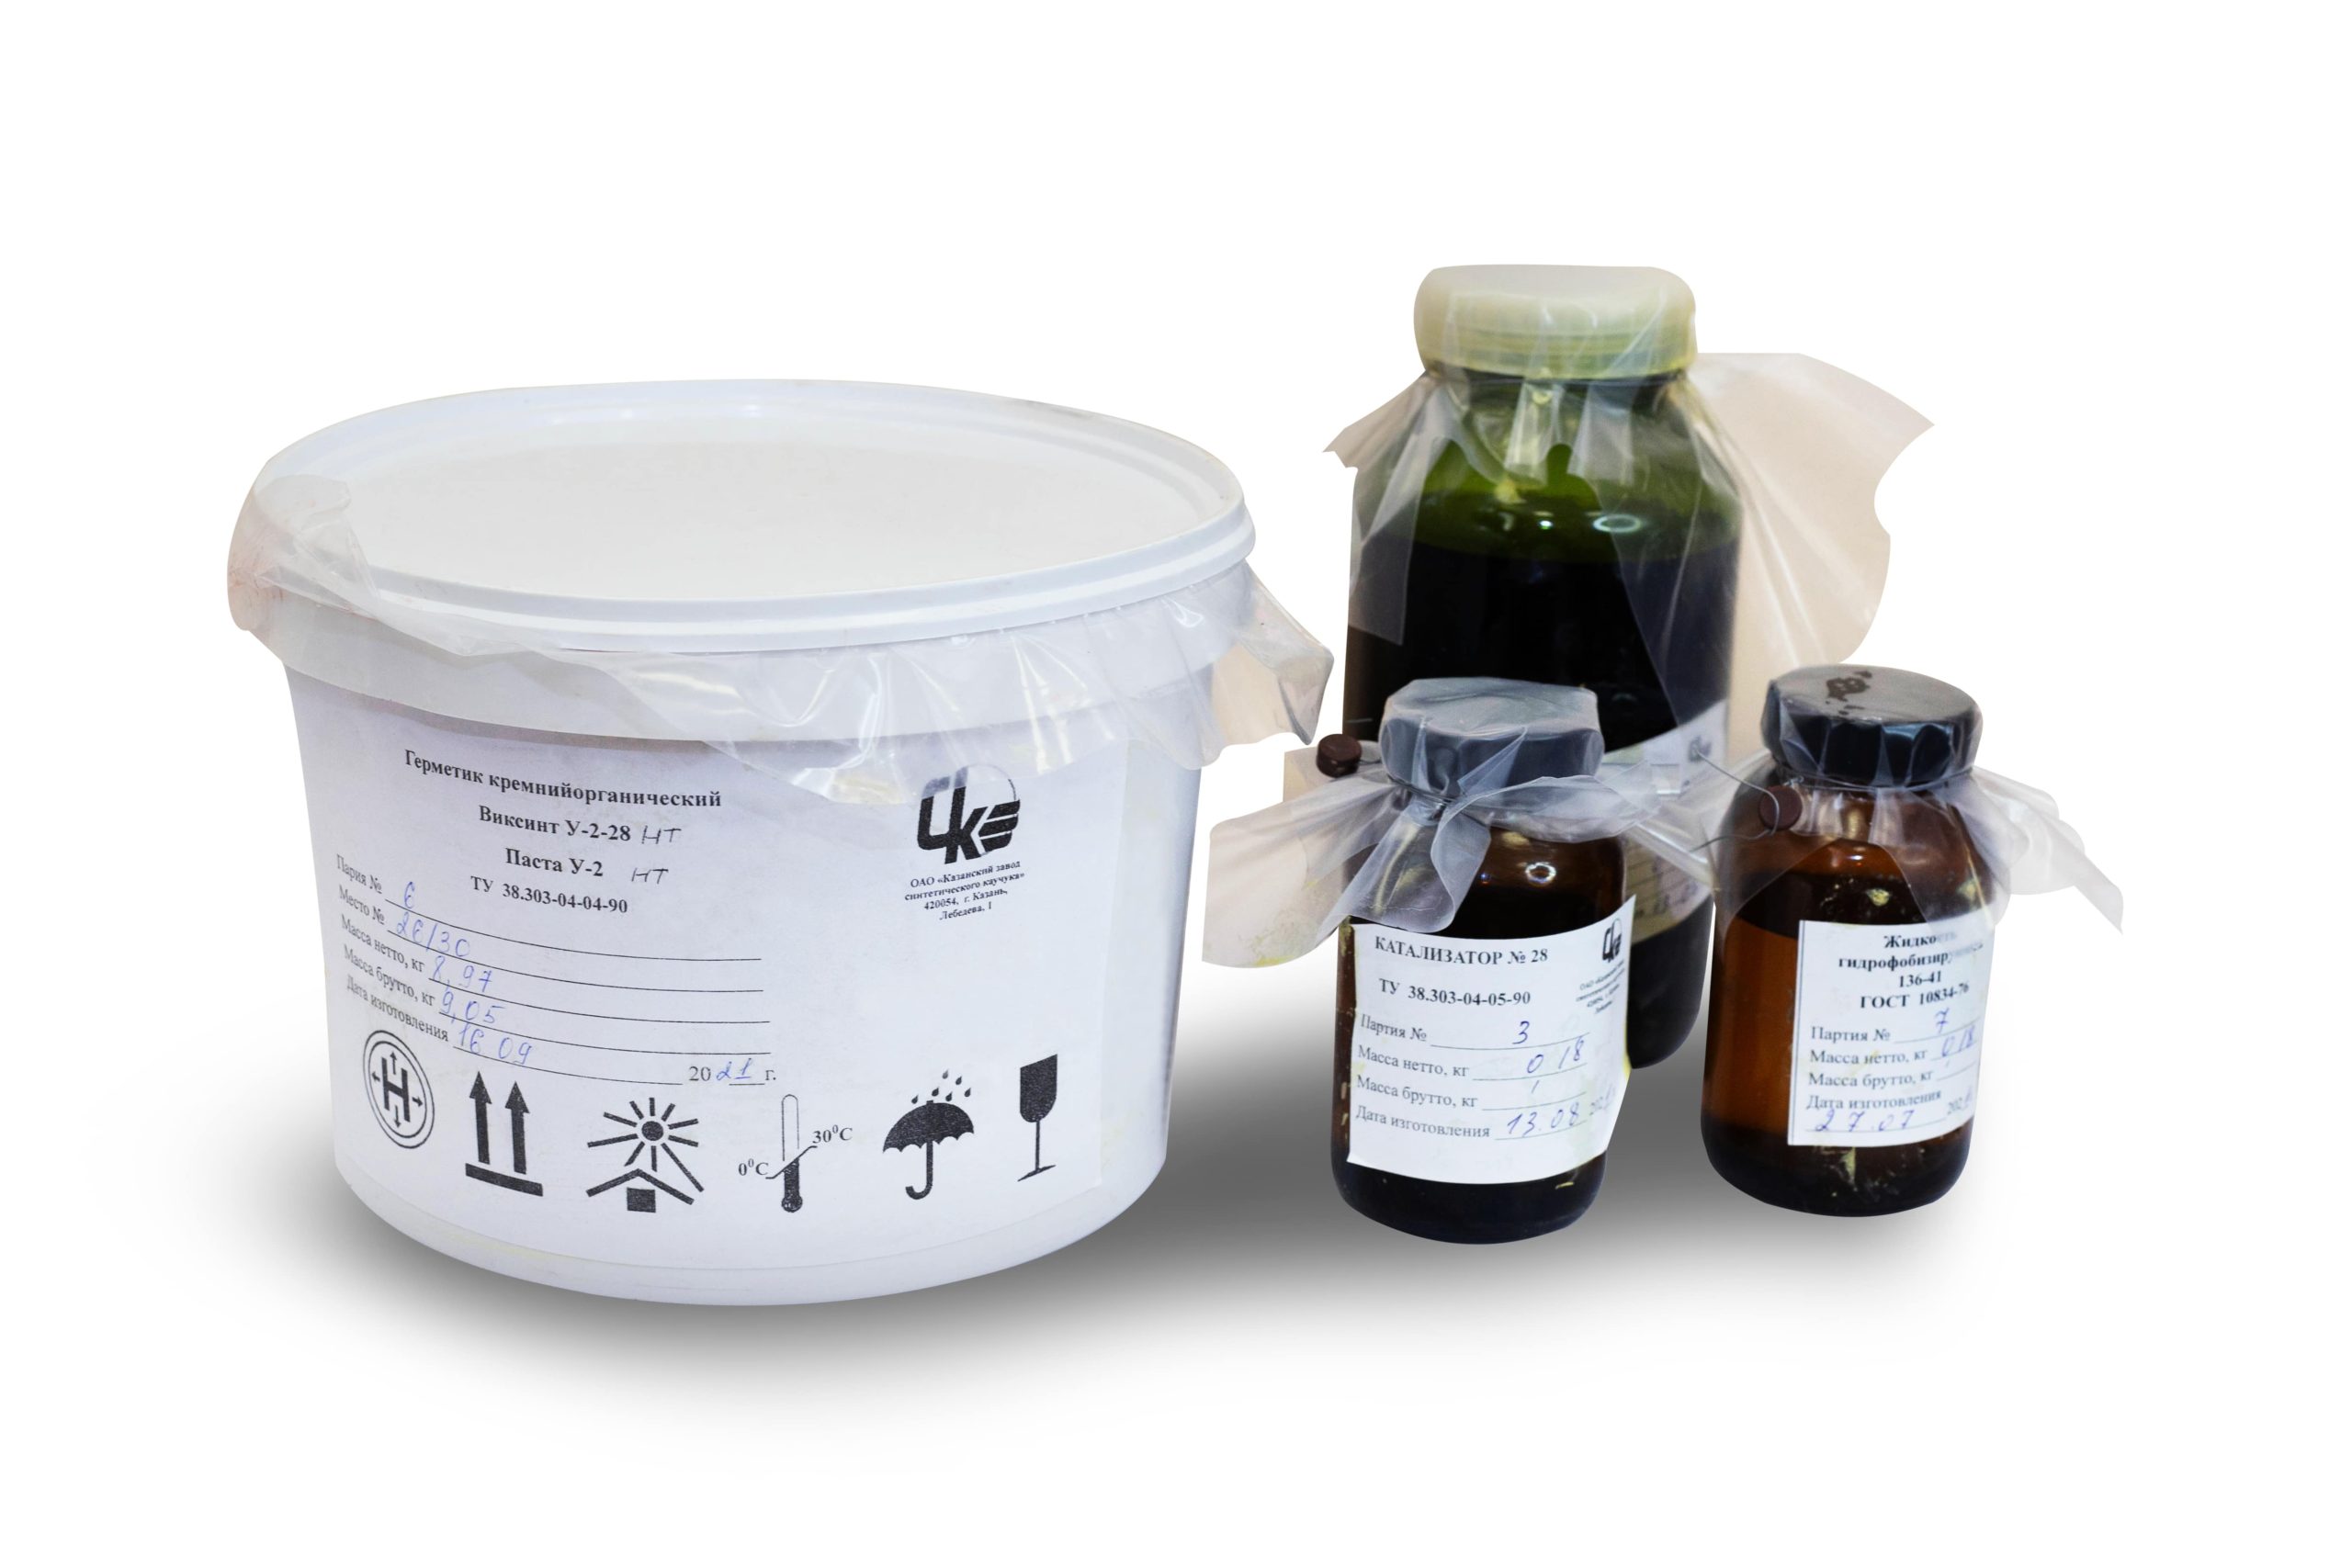 VIKSINT U-1-18 organosilicon sealant